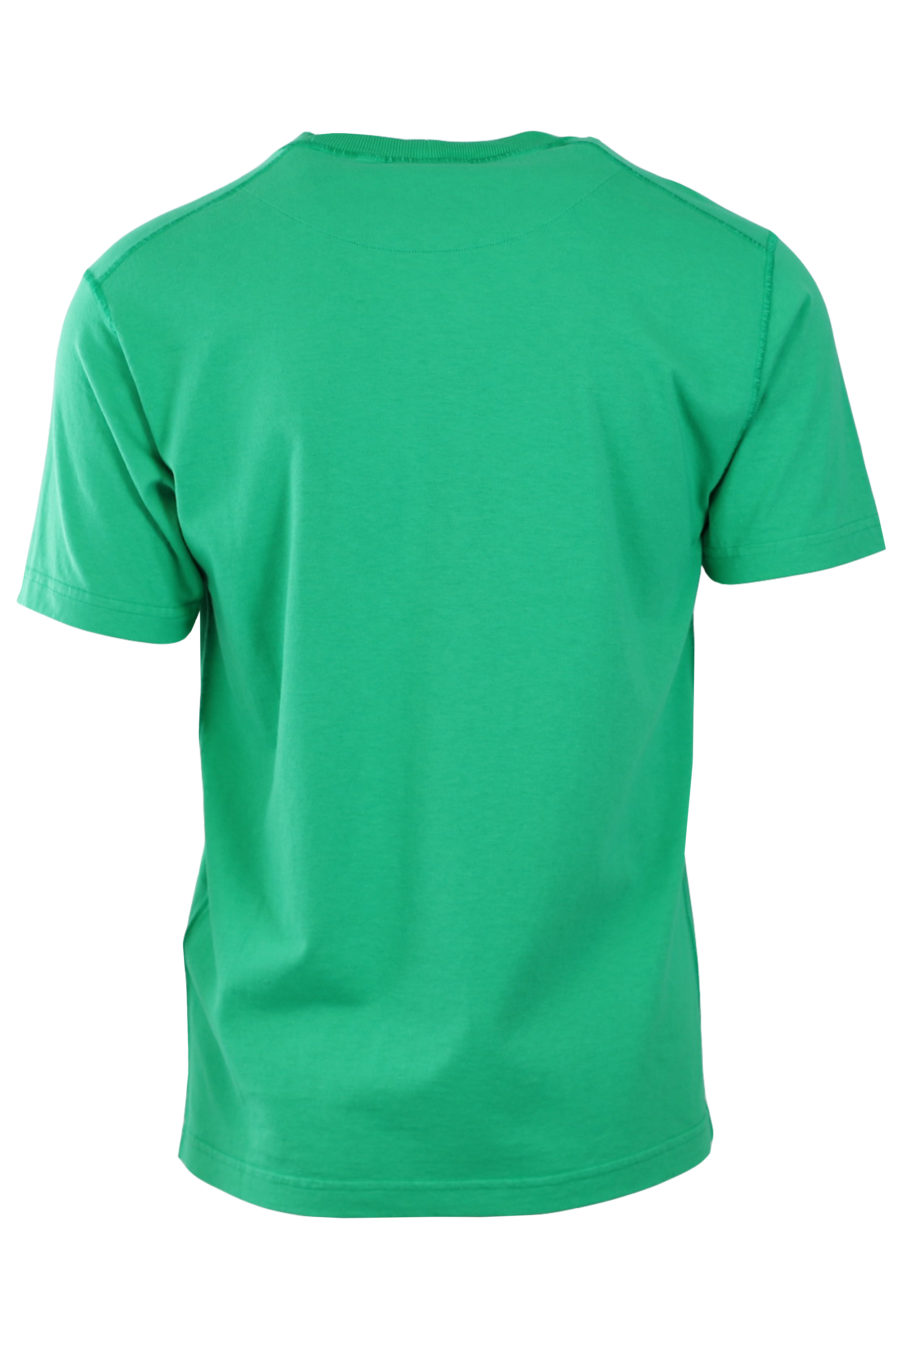 Grünes T-Shirt mit Markenaufnäher - bcf26c42d66bd5969e9c919f9d6ba05b2956b040